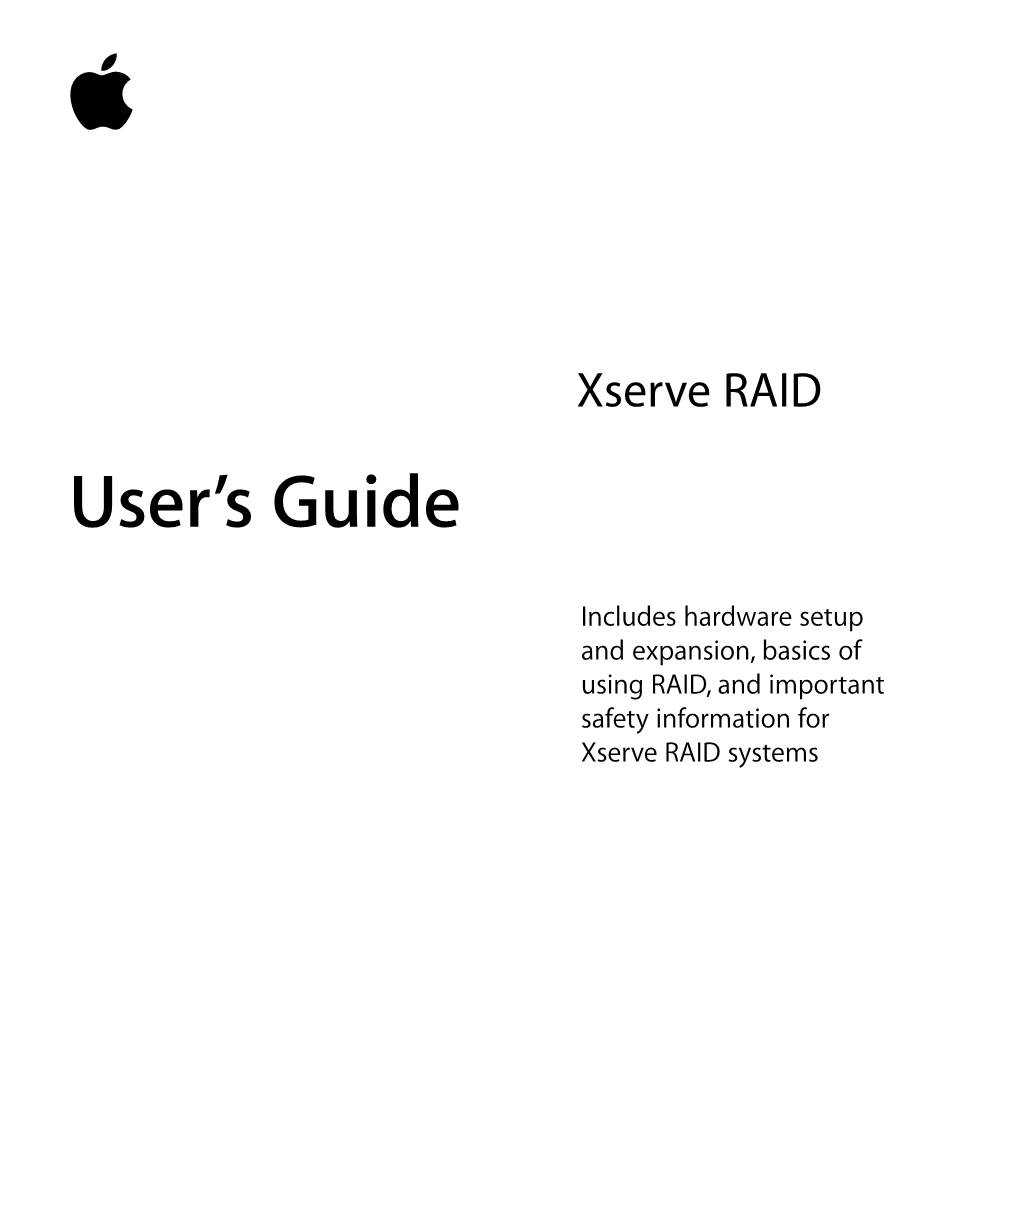 Xserve RAID User's Guide (Manual)